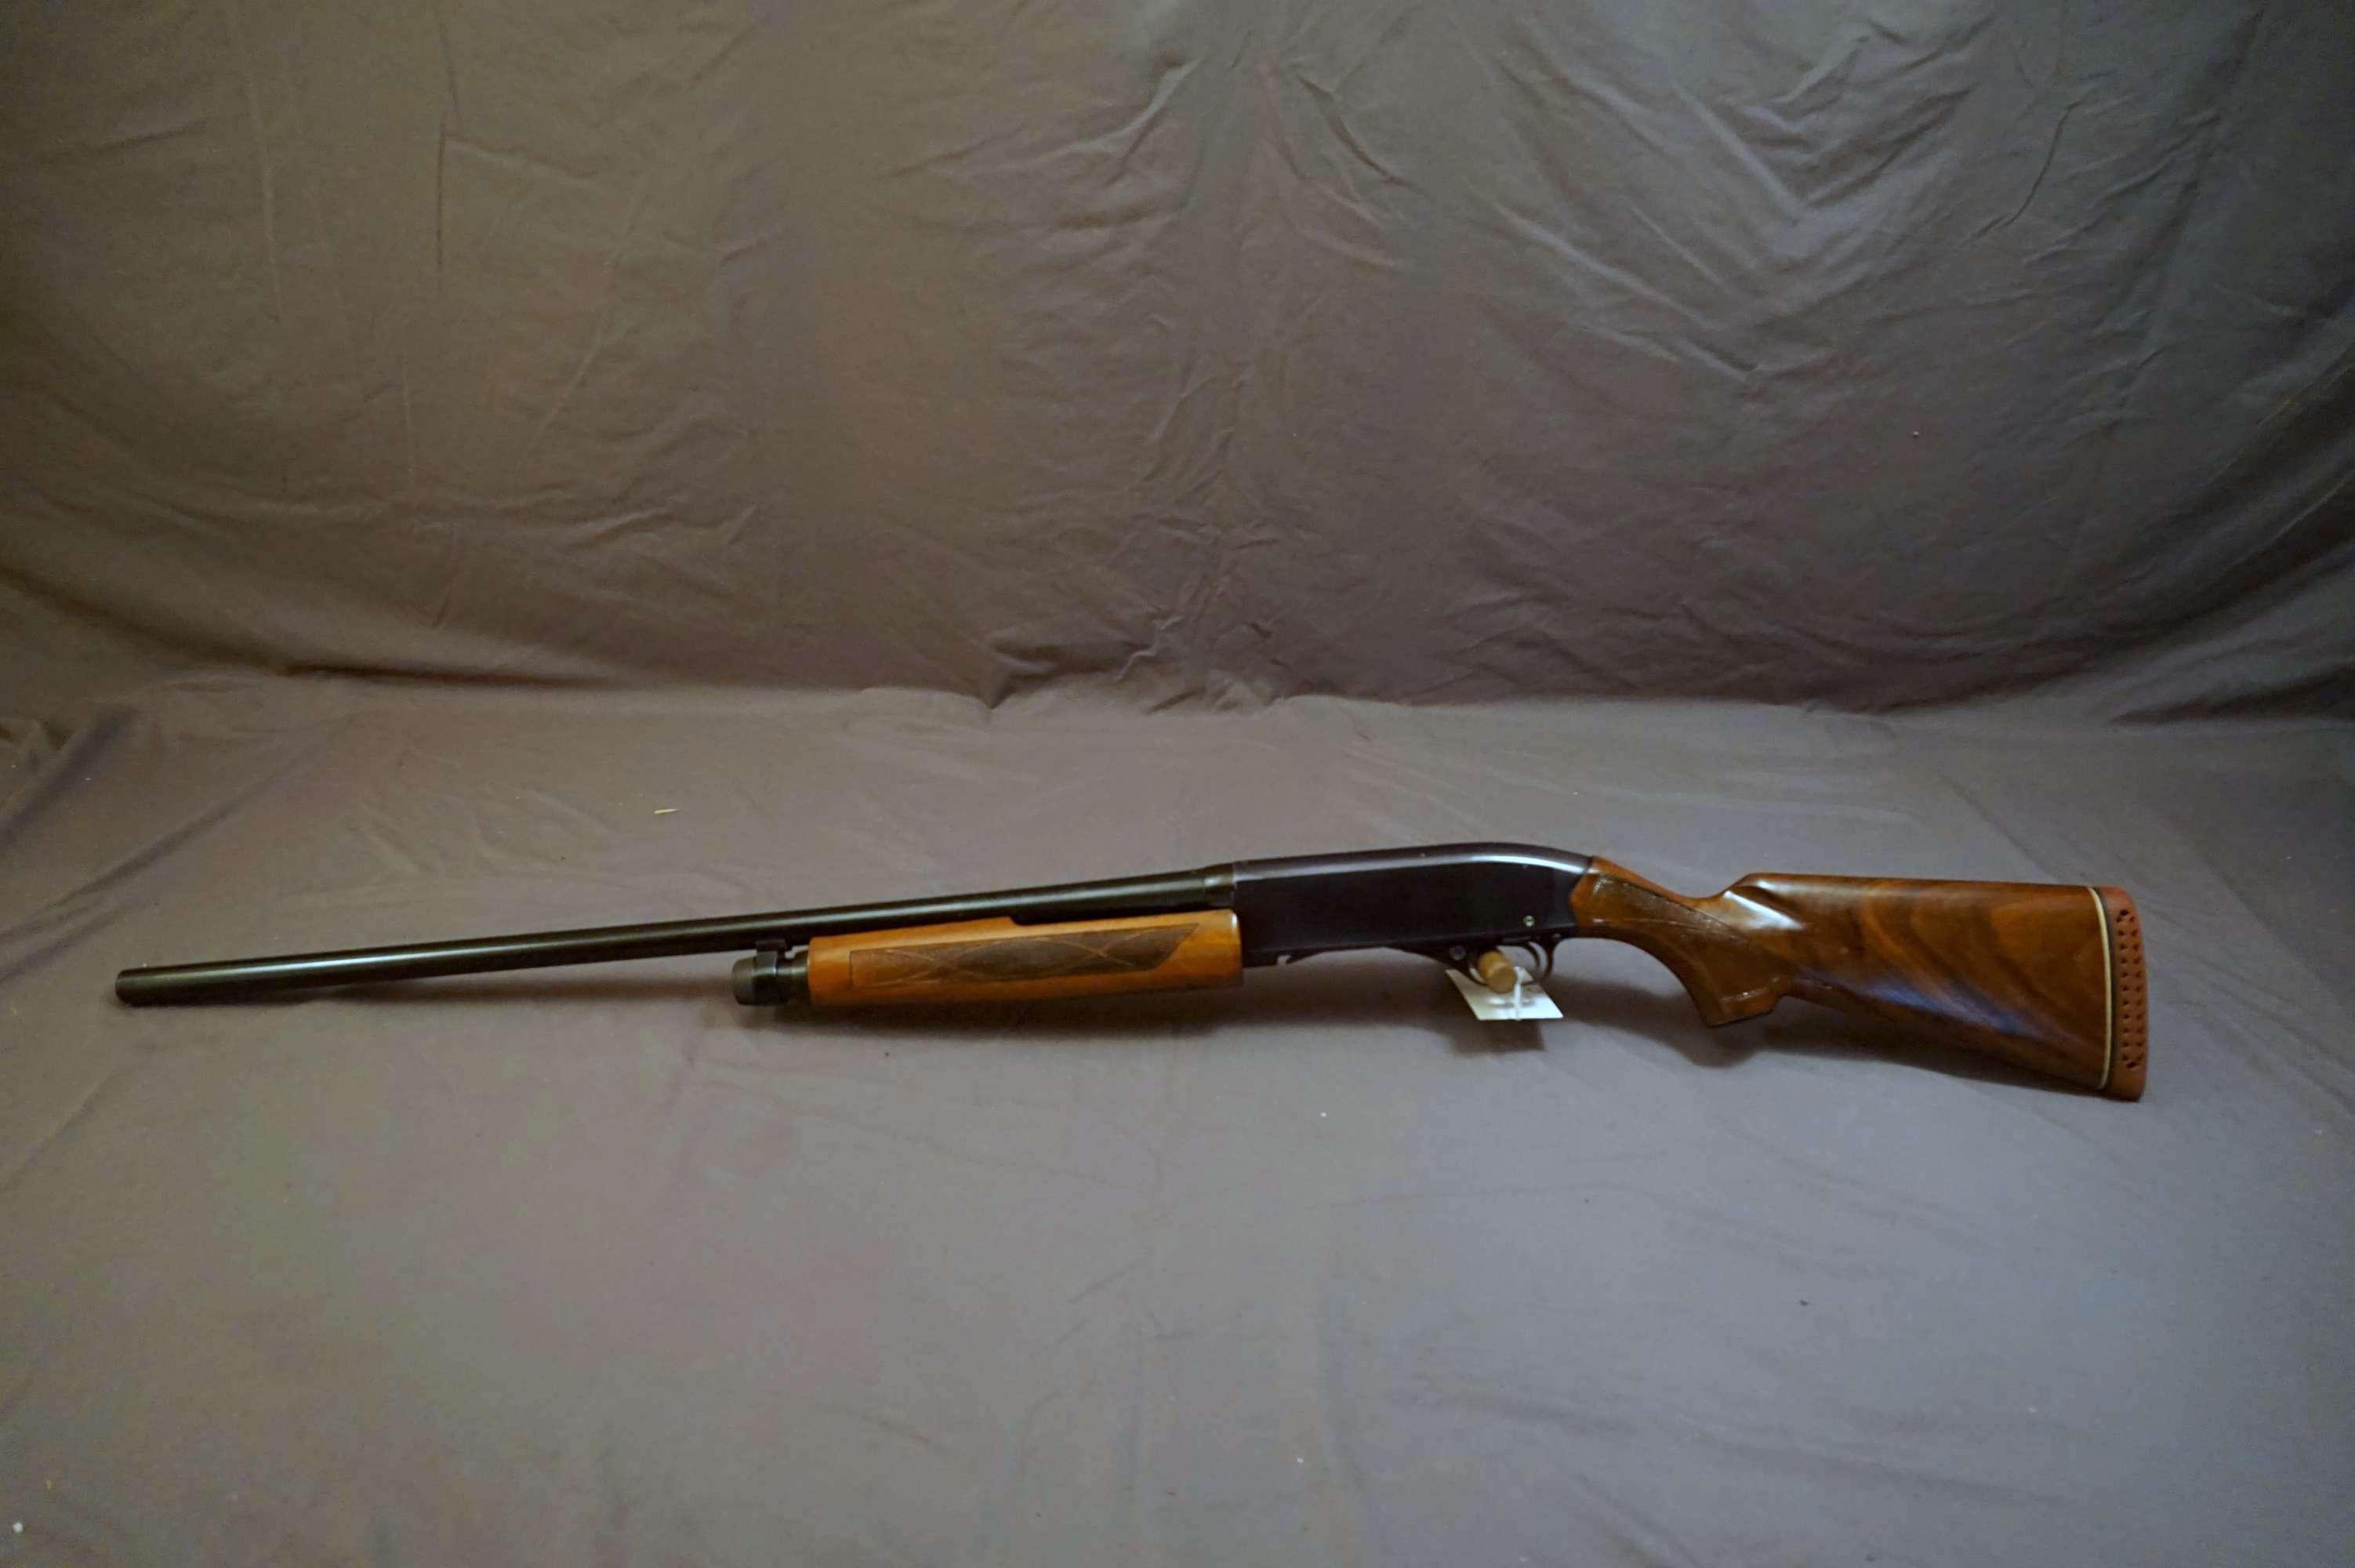 Winchester M. 1200 12ga Pump Shotgun